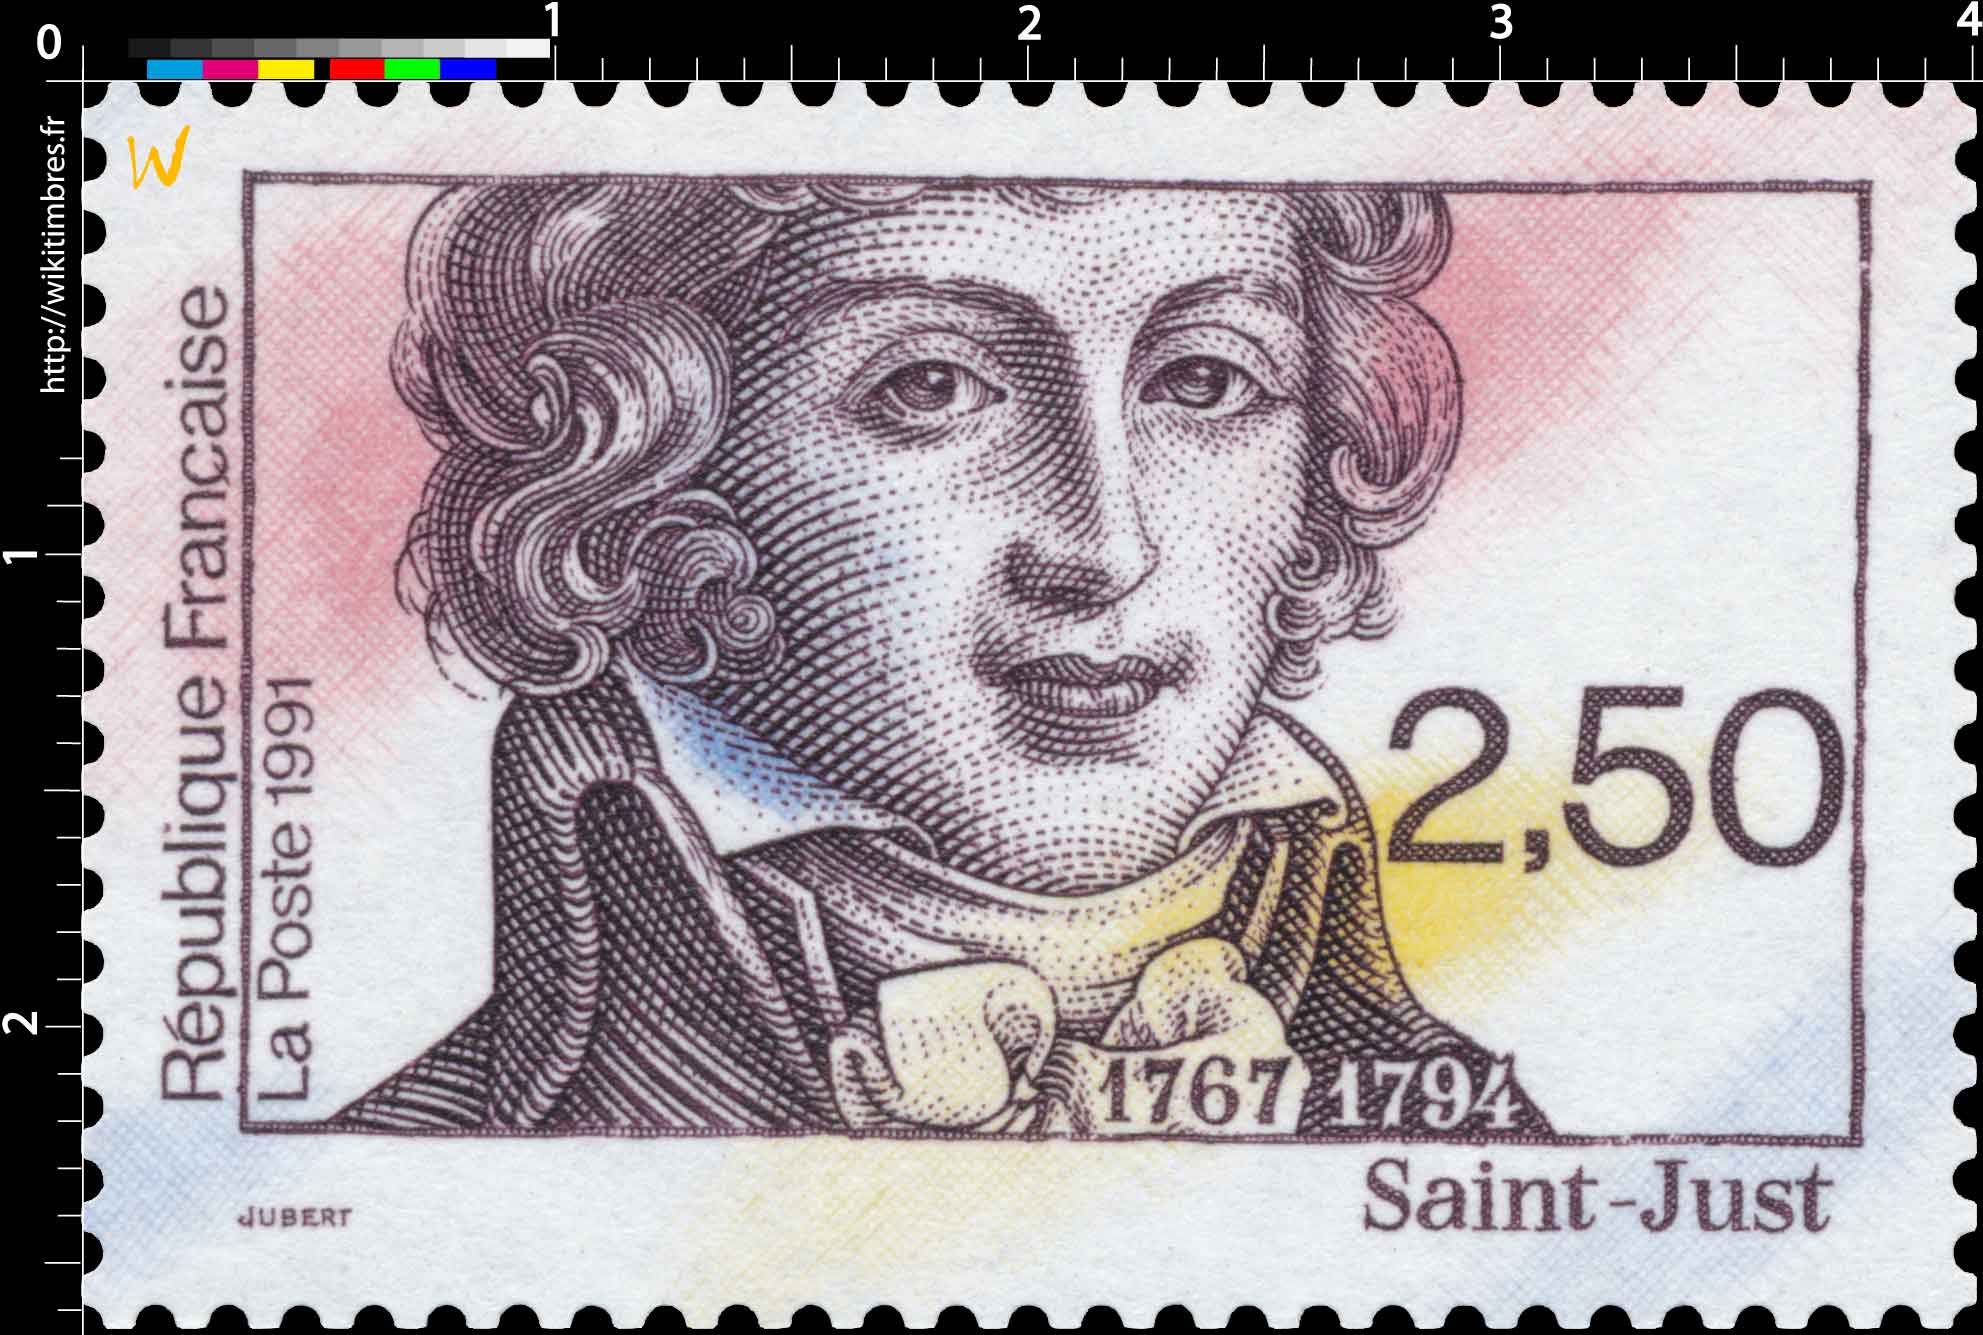 1991 Saint-Just 1767-1794